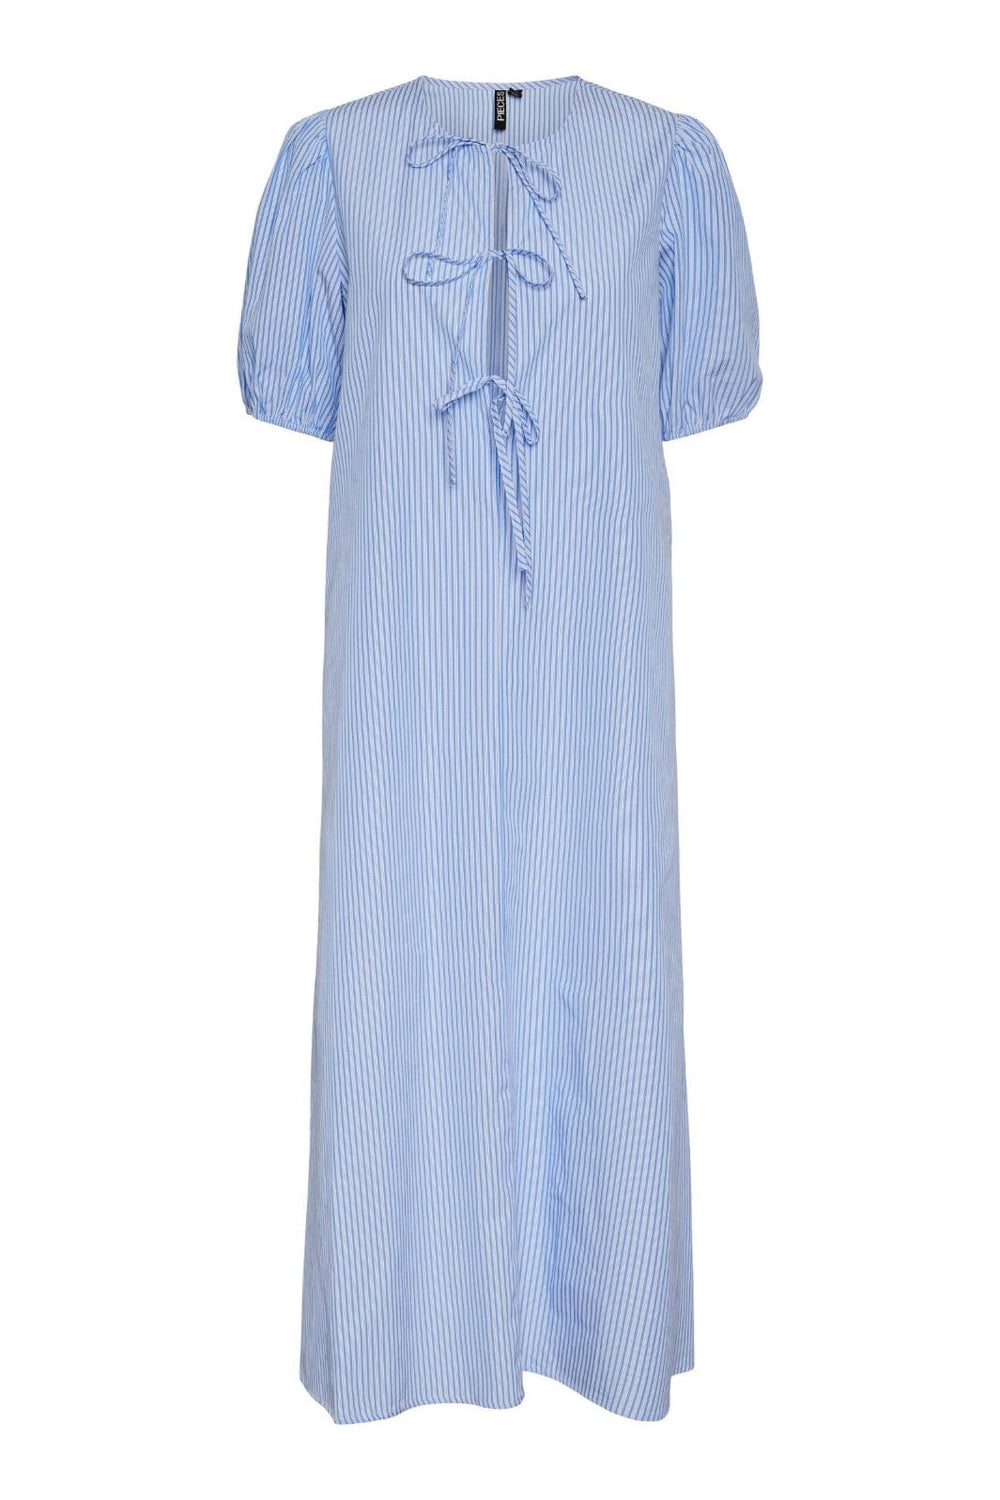 Pieces - Pcholly 2/4 Tie Dress Jit - 4497745 Cornflower Blue White Kjoler 